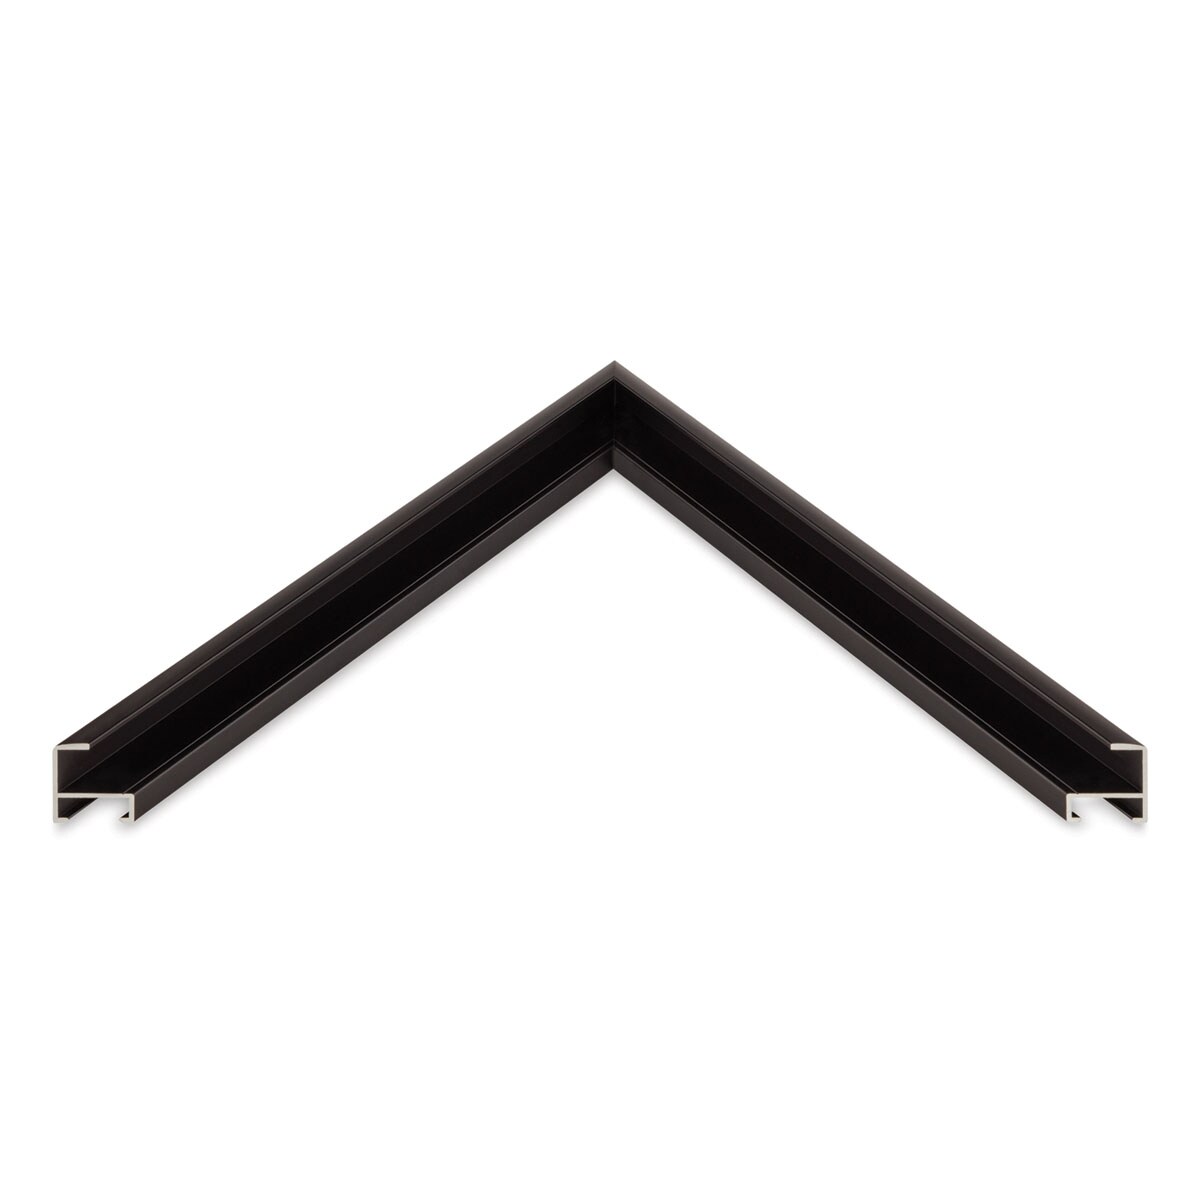 Nielsen Bainbridge Metal Frame Kit-9&#x201D; x 7/16&#x201D;, Black, 2 Bars